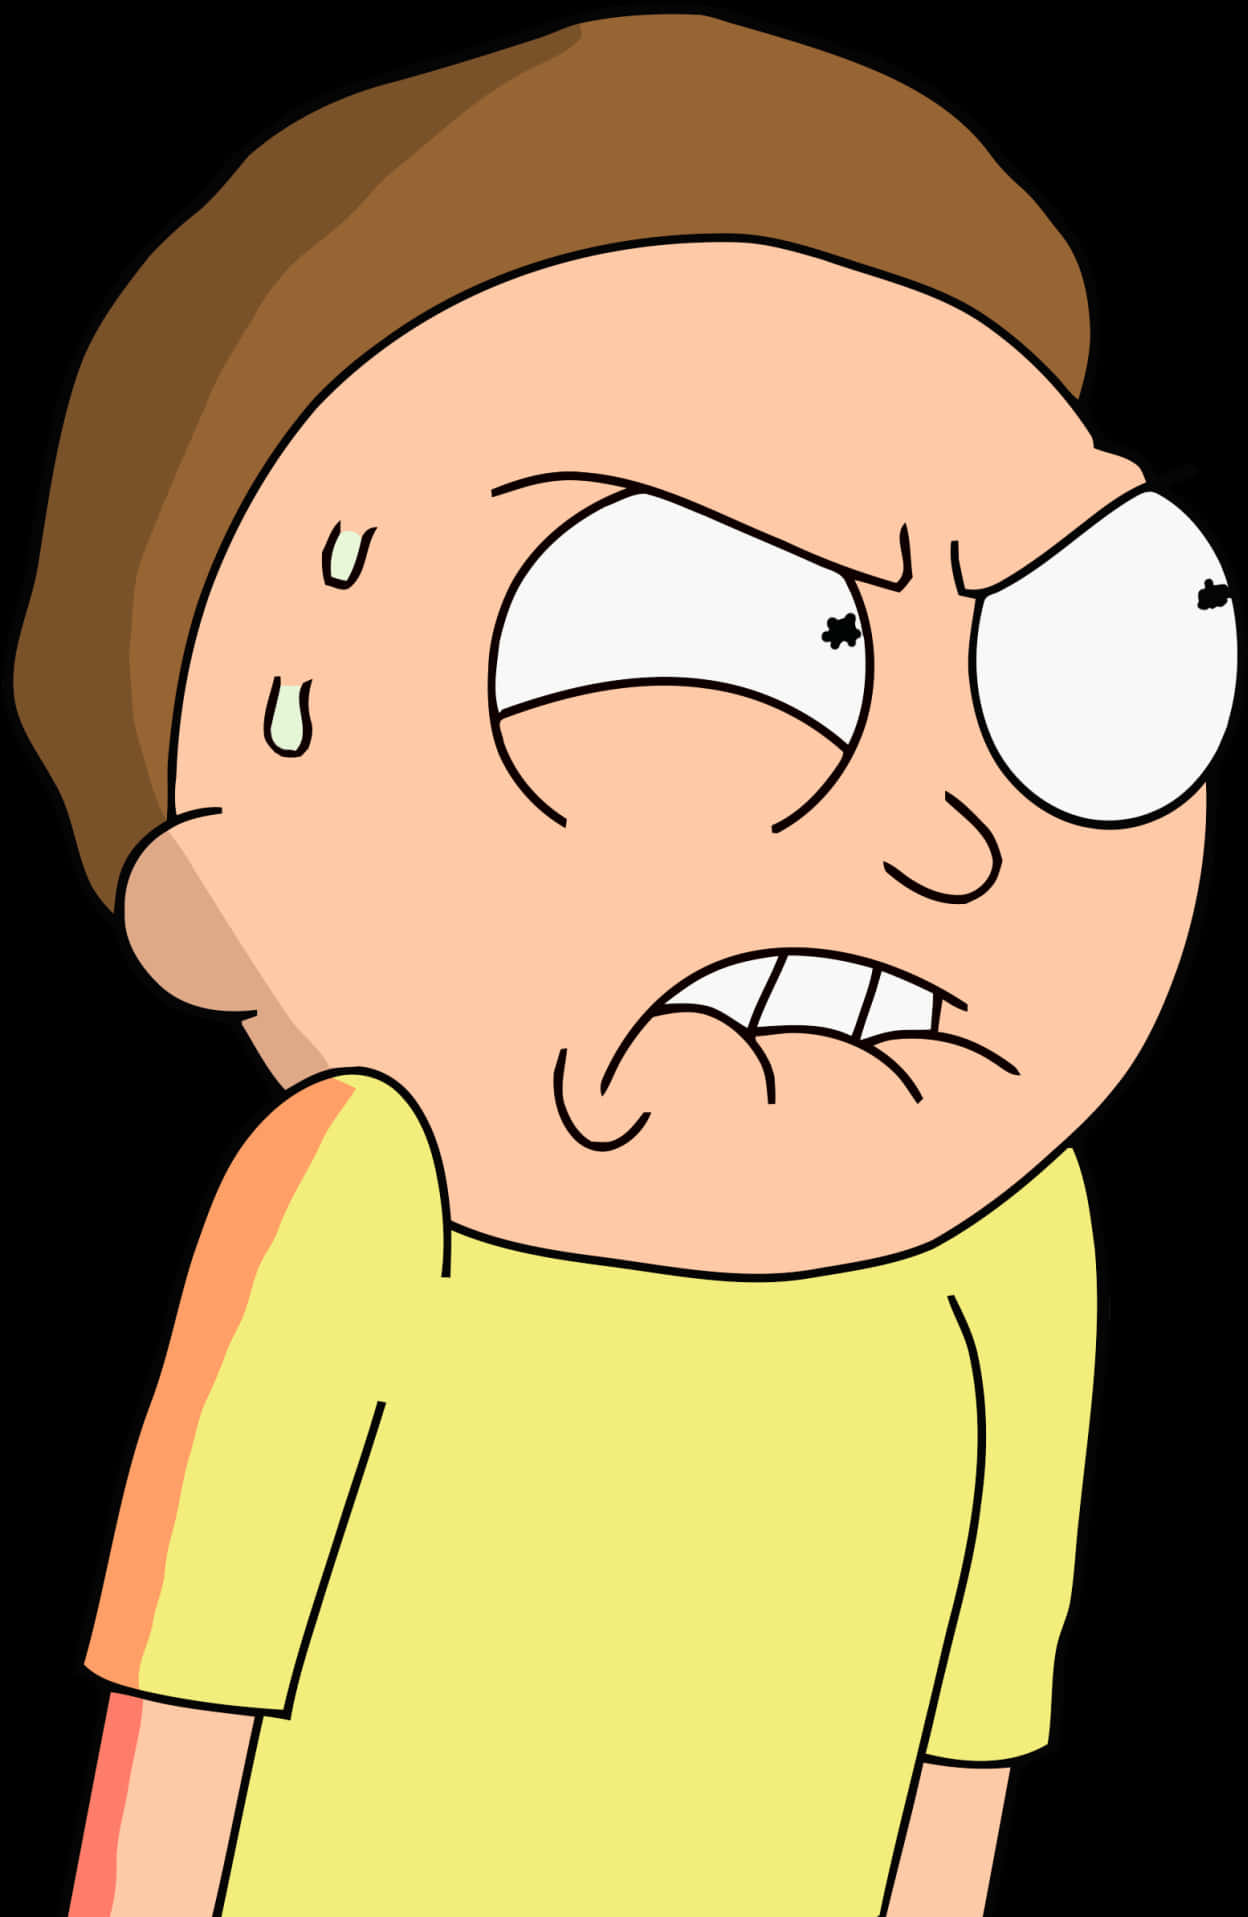 Cartoon Of A Cartoon Man With A Frowning Face